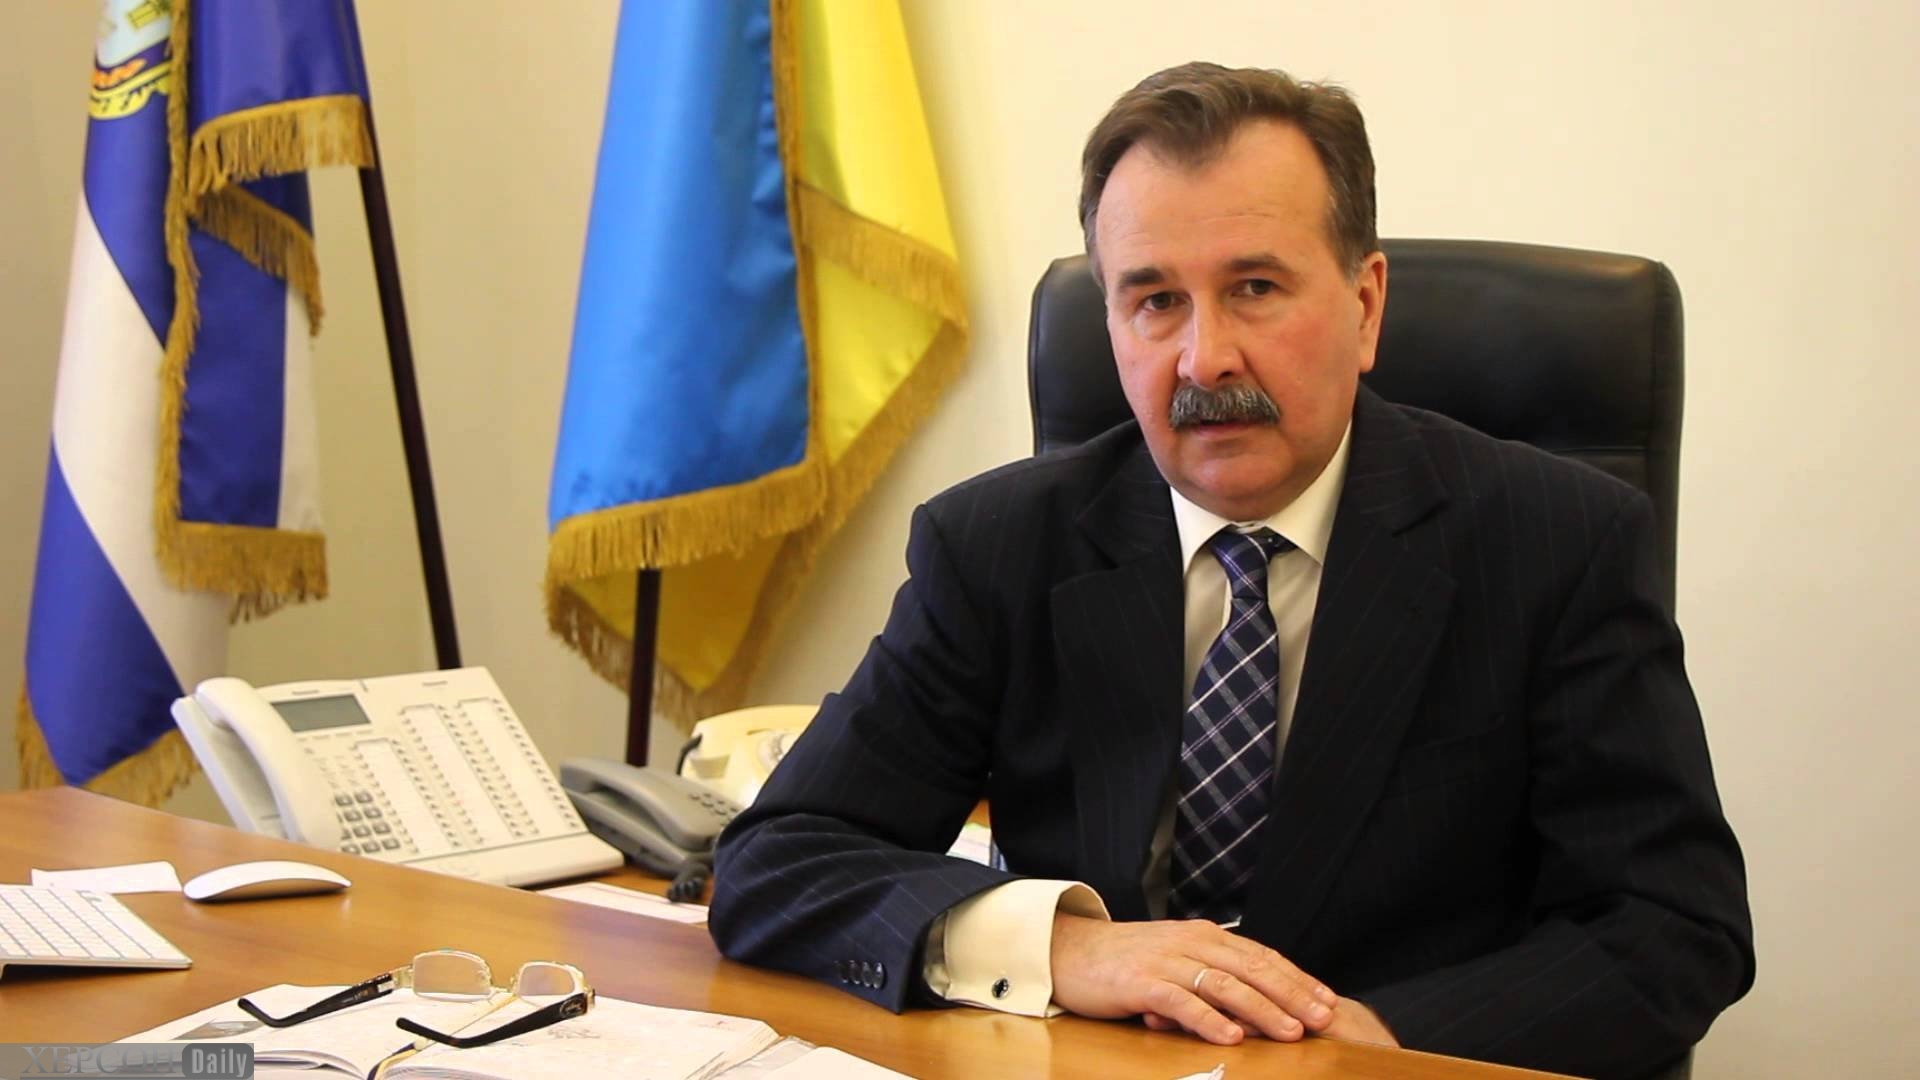 Владимир Миколаенко, мэр Херсона, ответил на обвинения в сепаратизме от Саакашвили